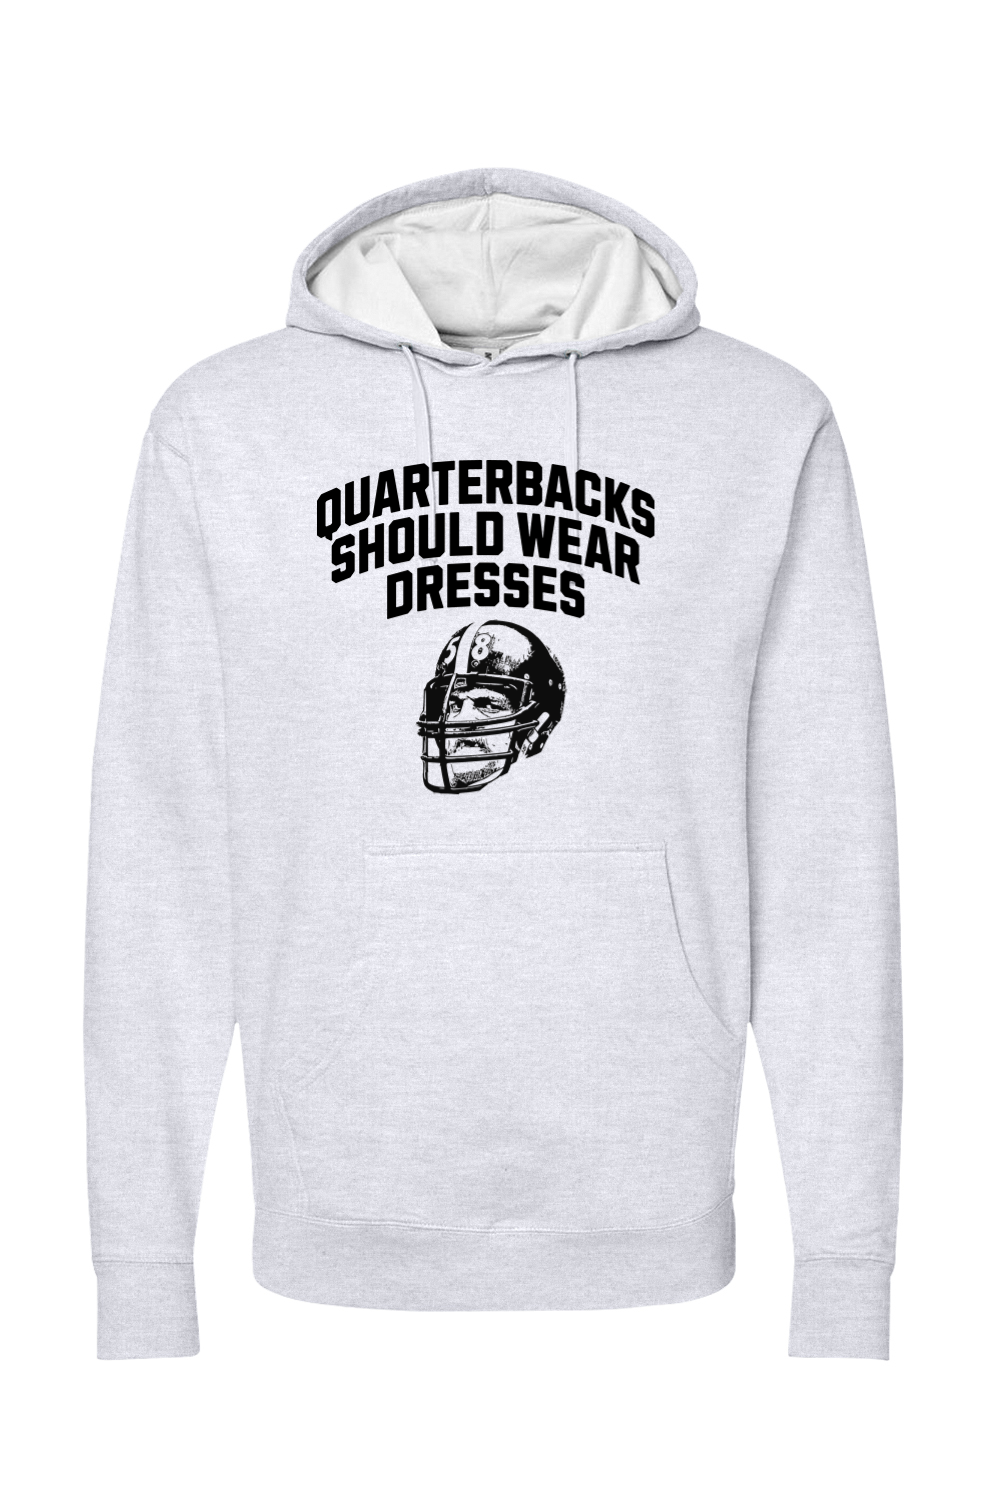 Quarterbacks Should Wear Dresses - Hoodie - Yinzylvania